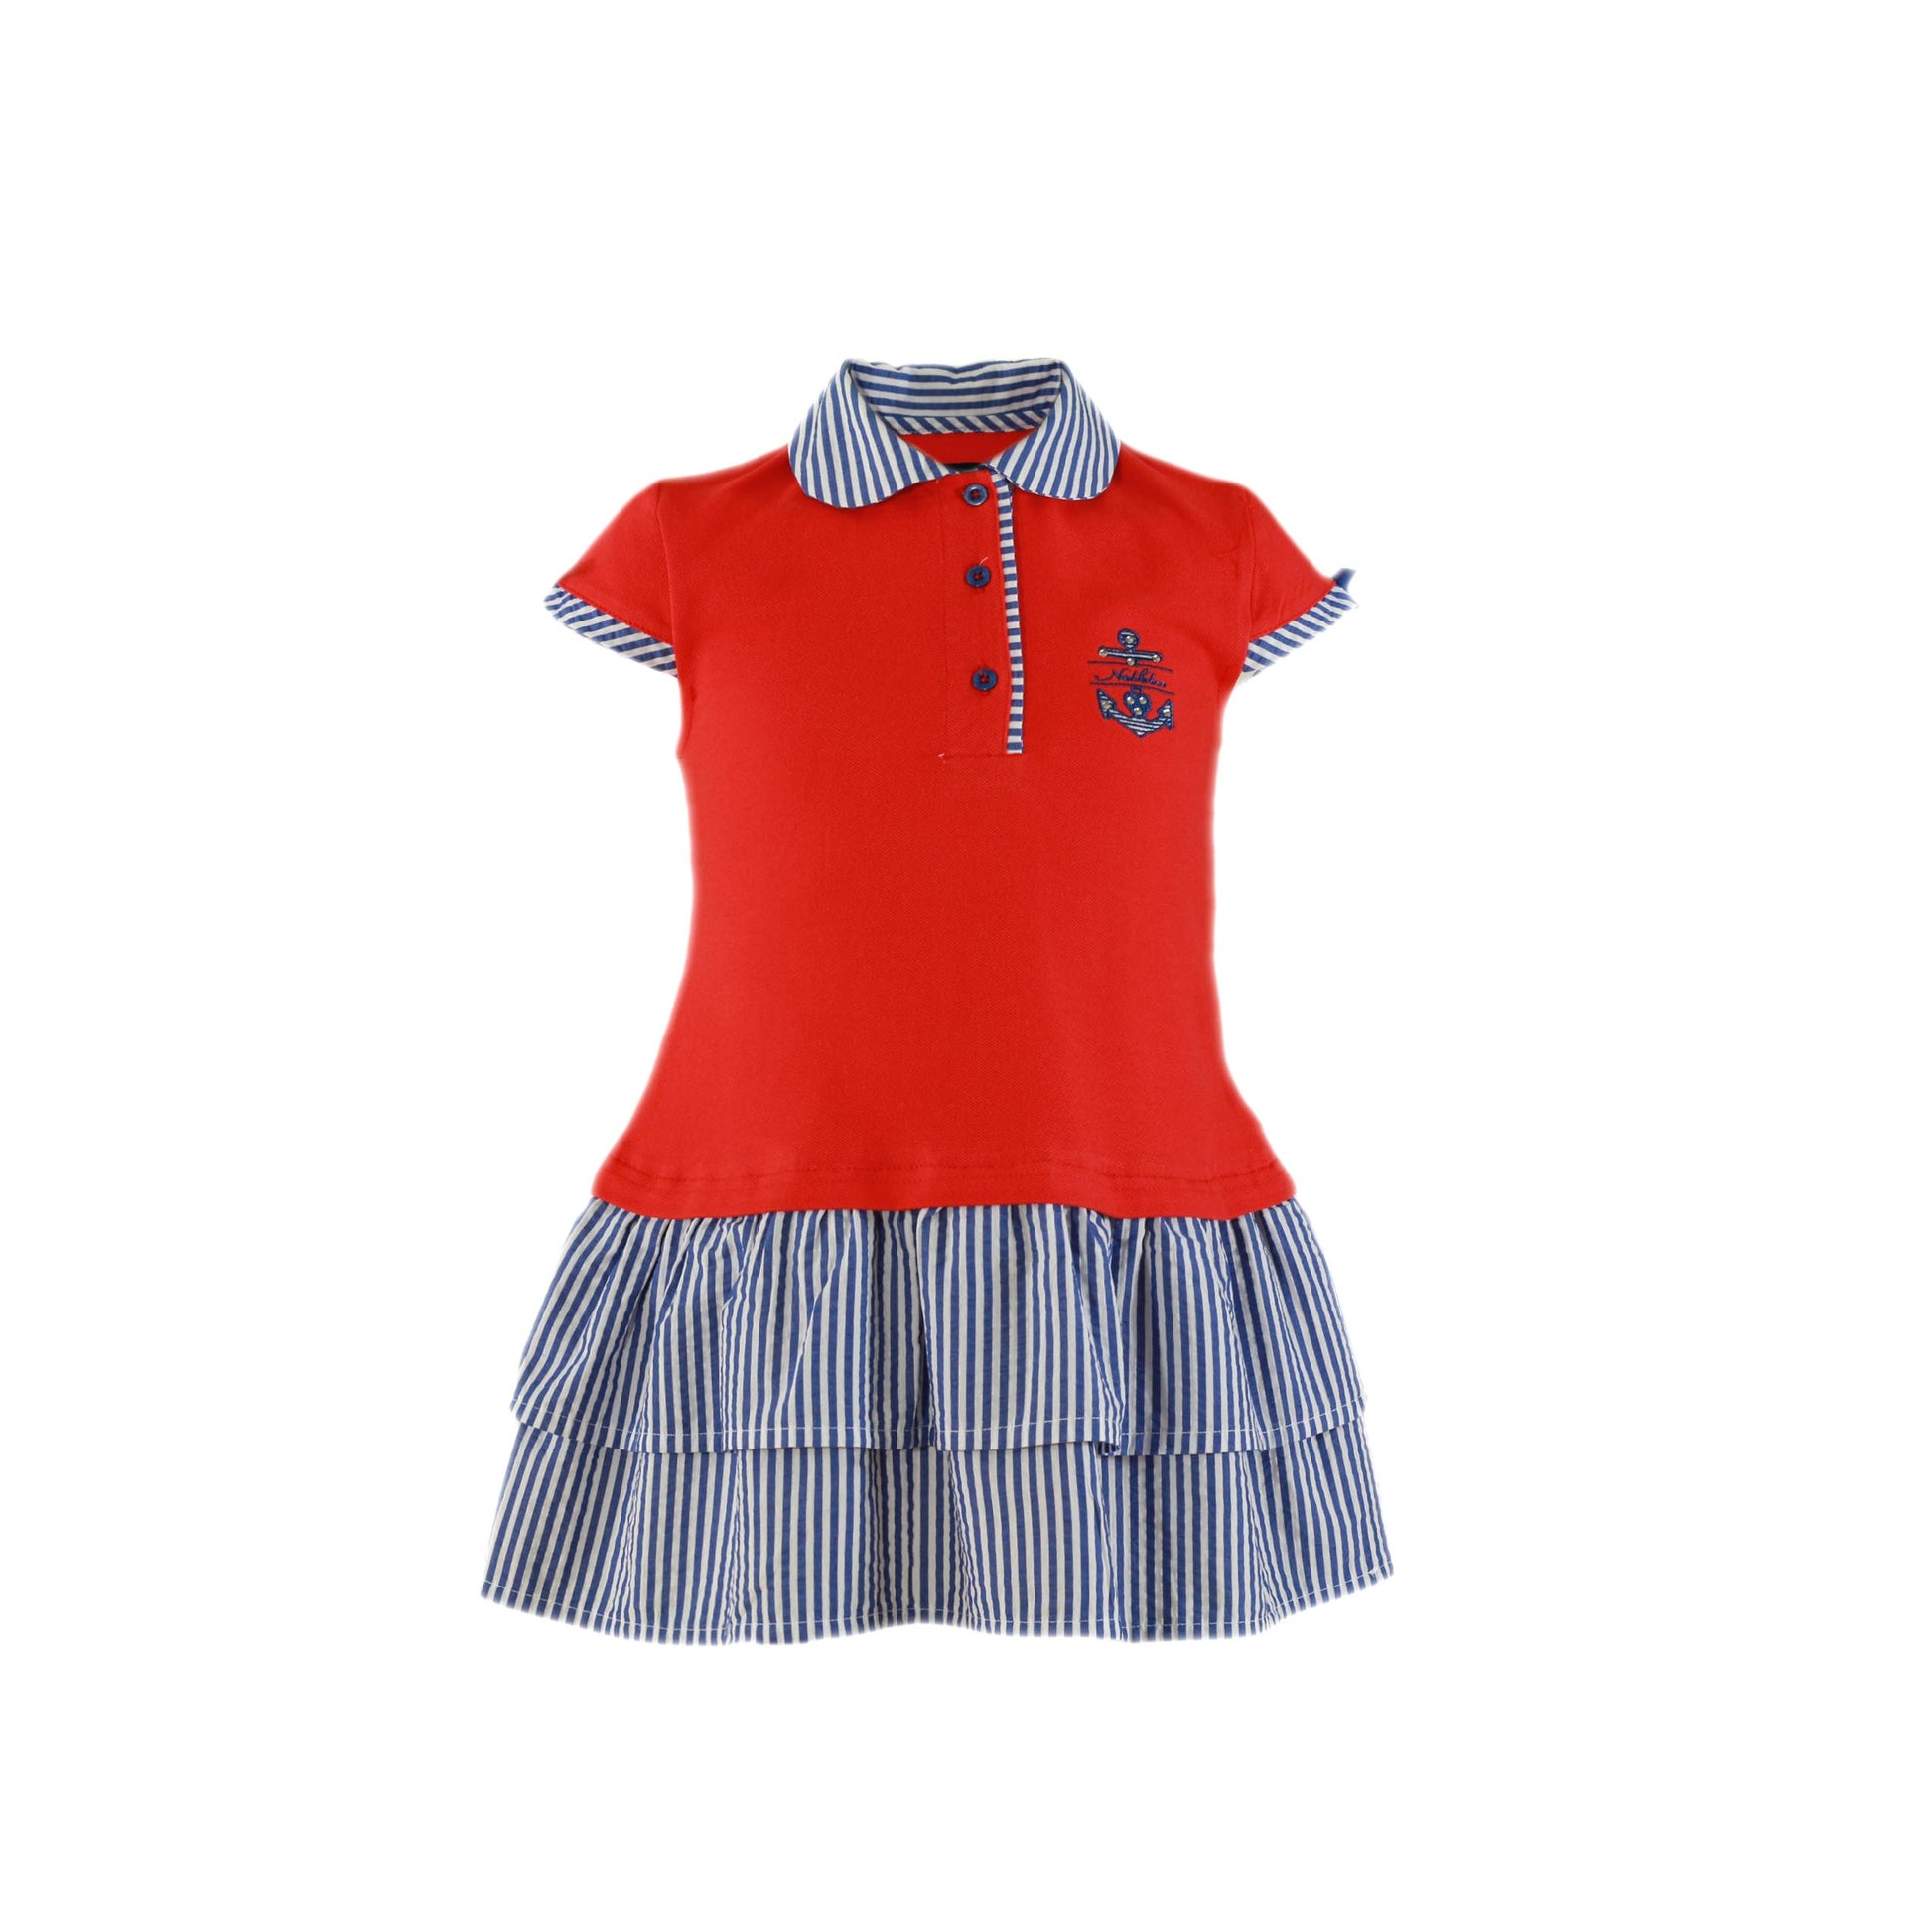 MIRANDA NEL BLU Red & Blue Girls Polo Dress - 1407